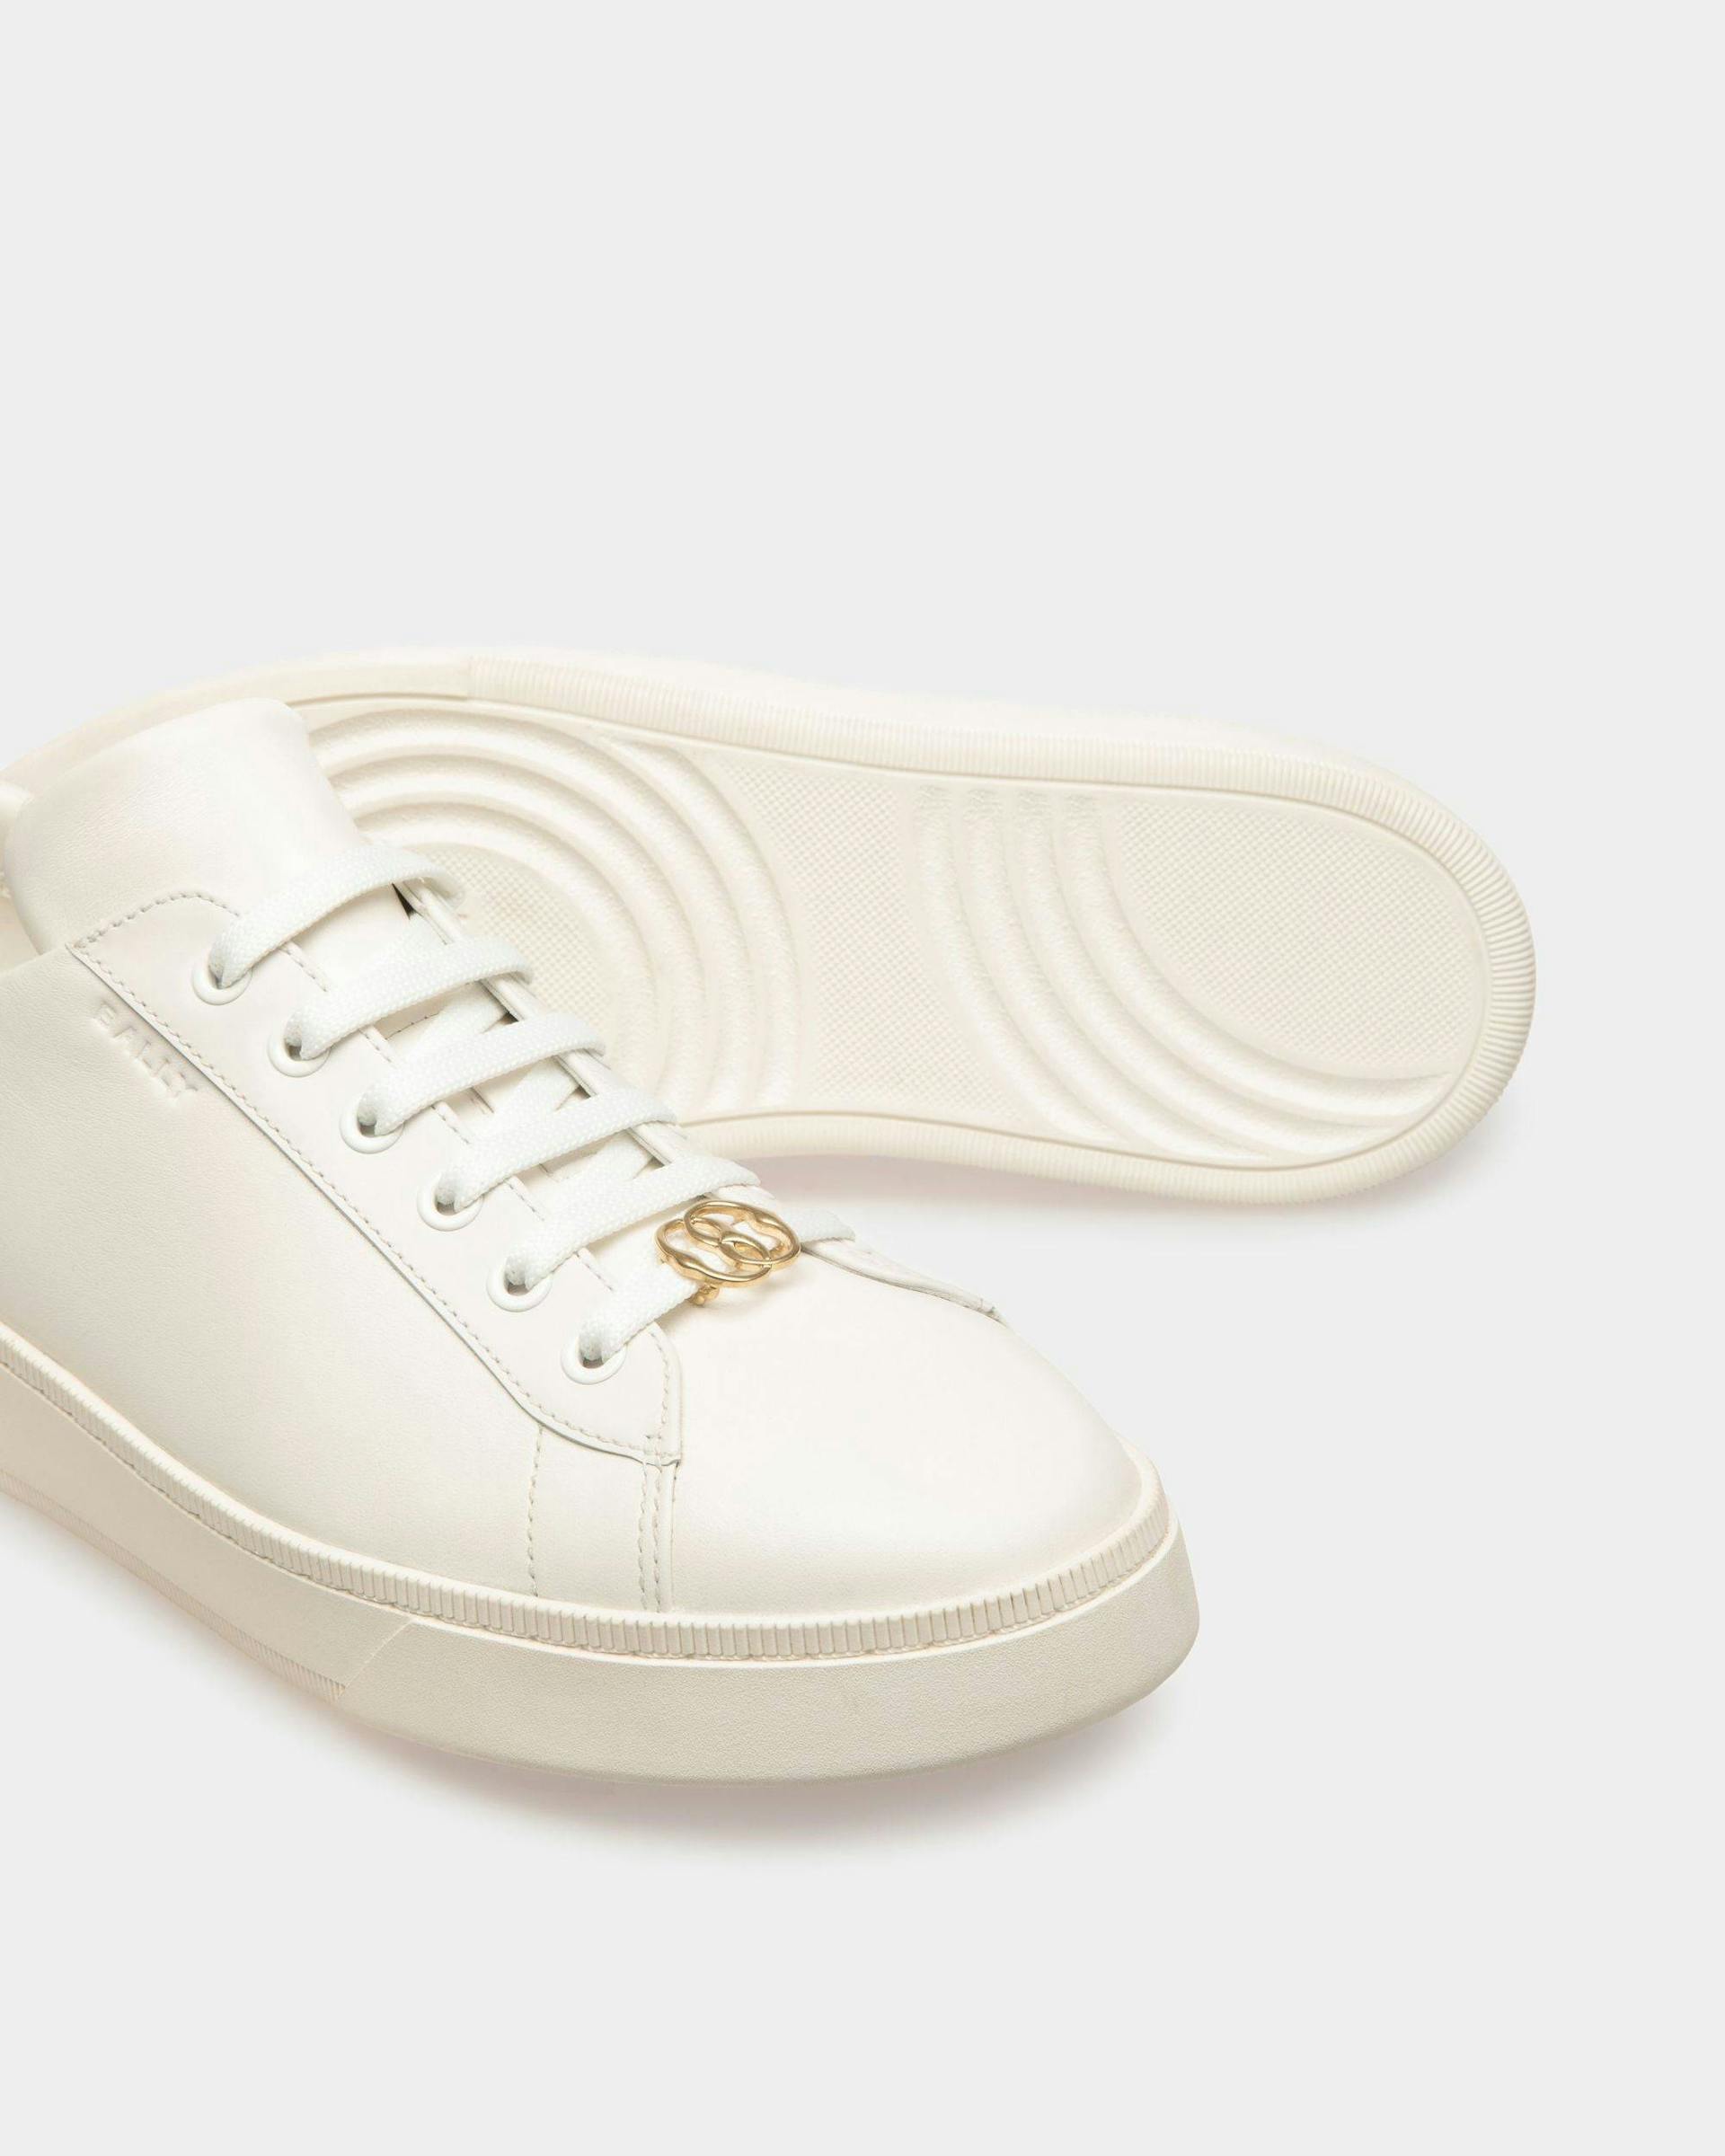 Men's Raise Sneakers In White Leather | Bally | Still Life Detail